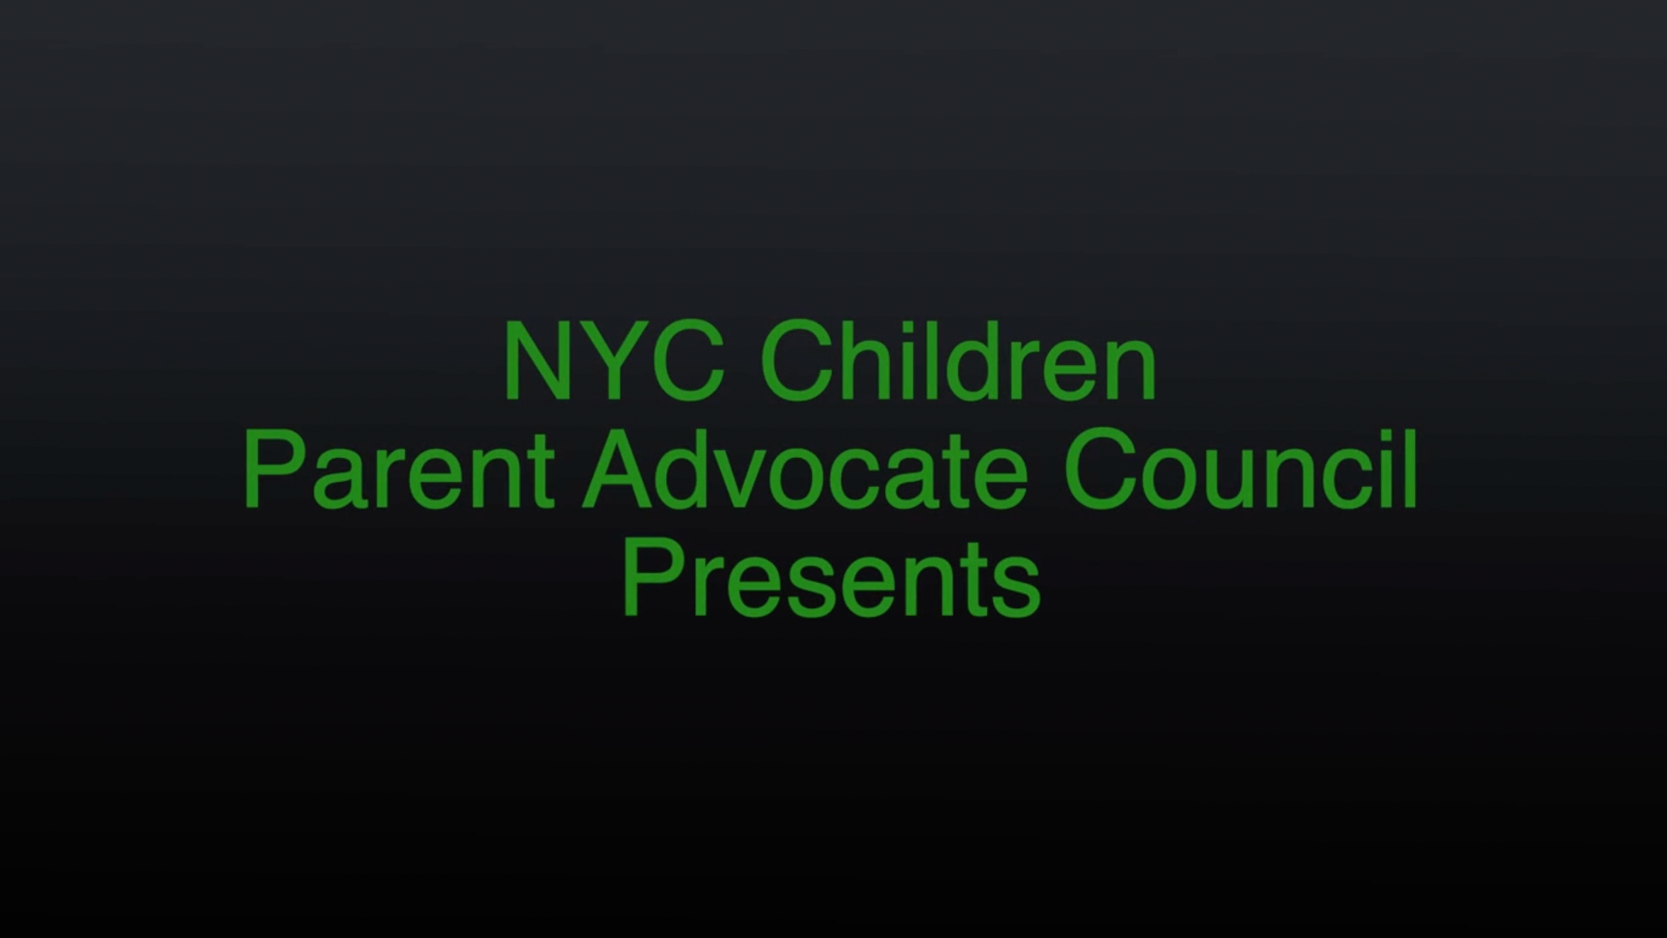 NYC Children Parent Advocate Council Presents Black Background Green Text